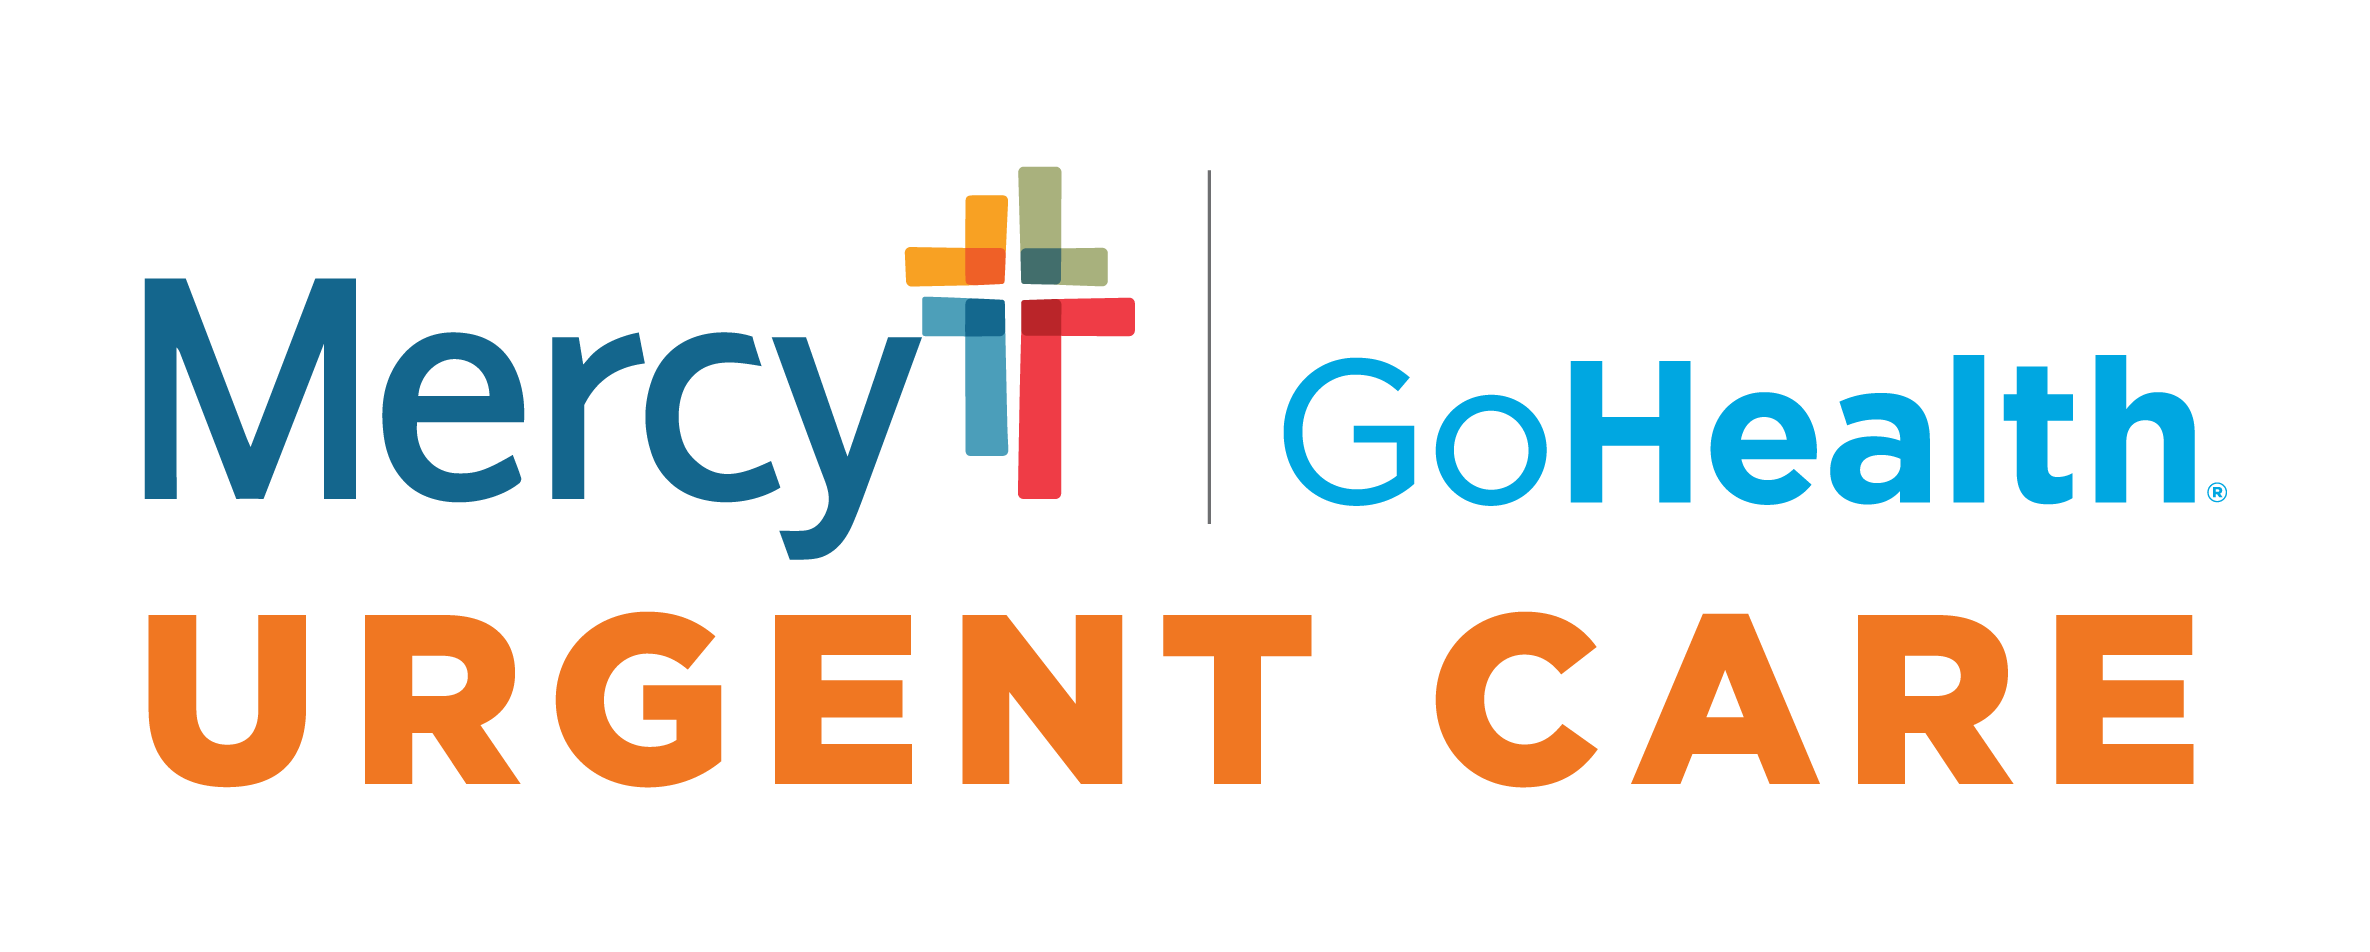 Mercy- GoHealth Urgent Care - Bentonville Logo